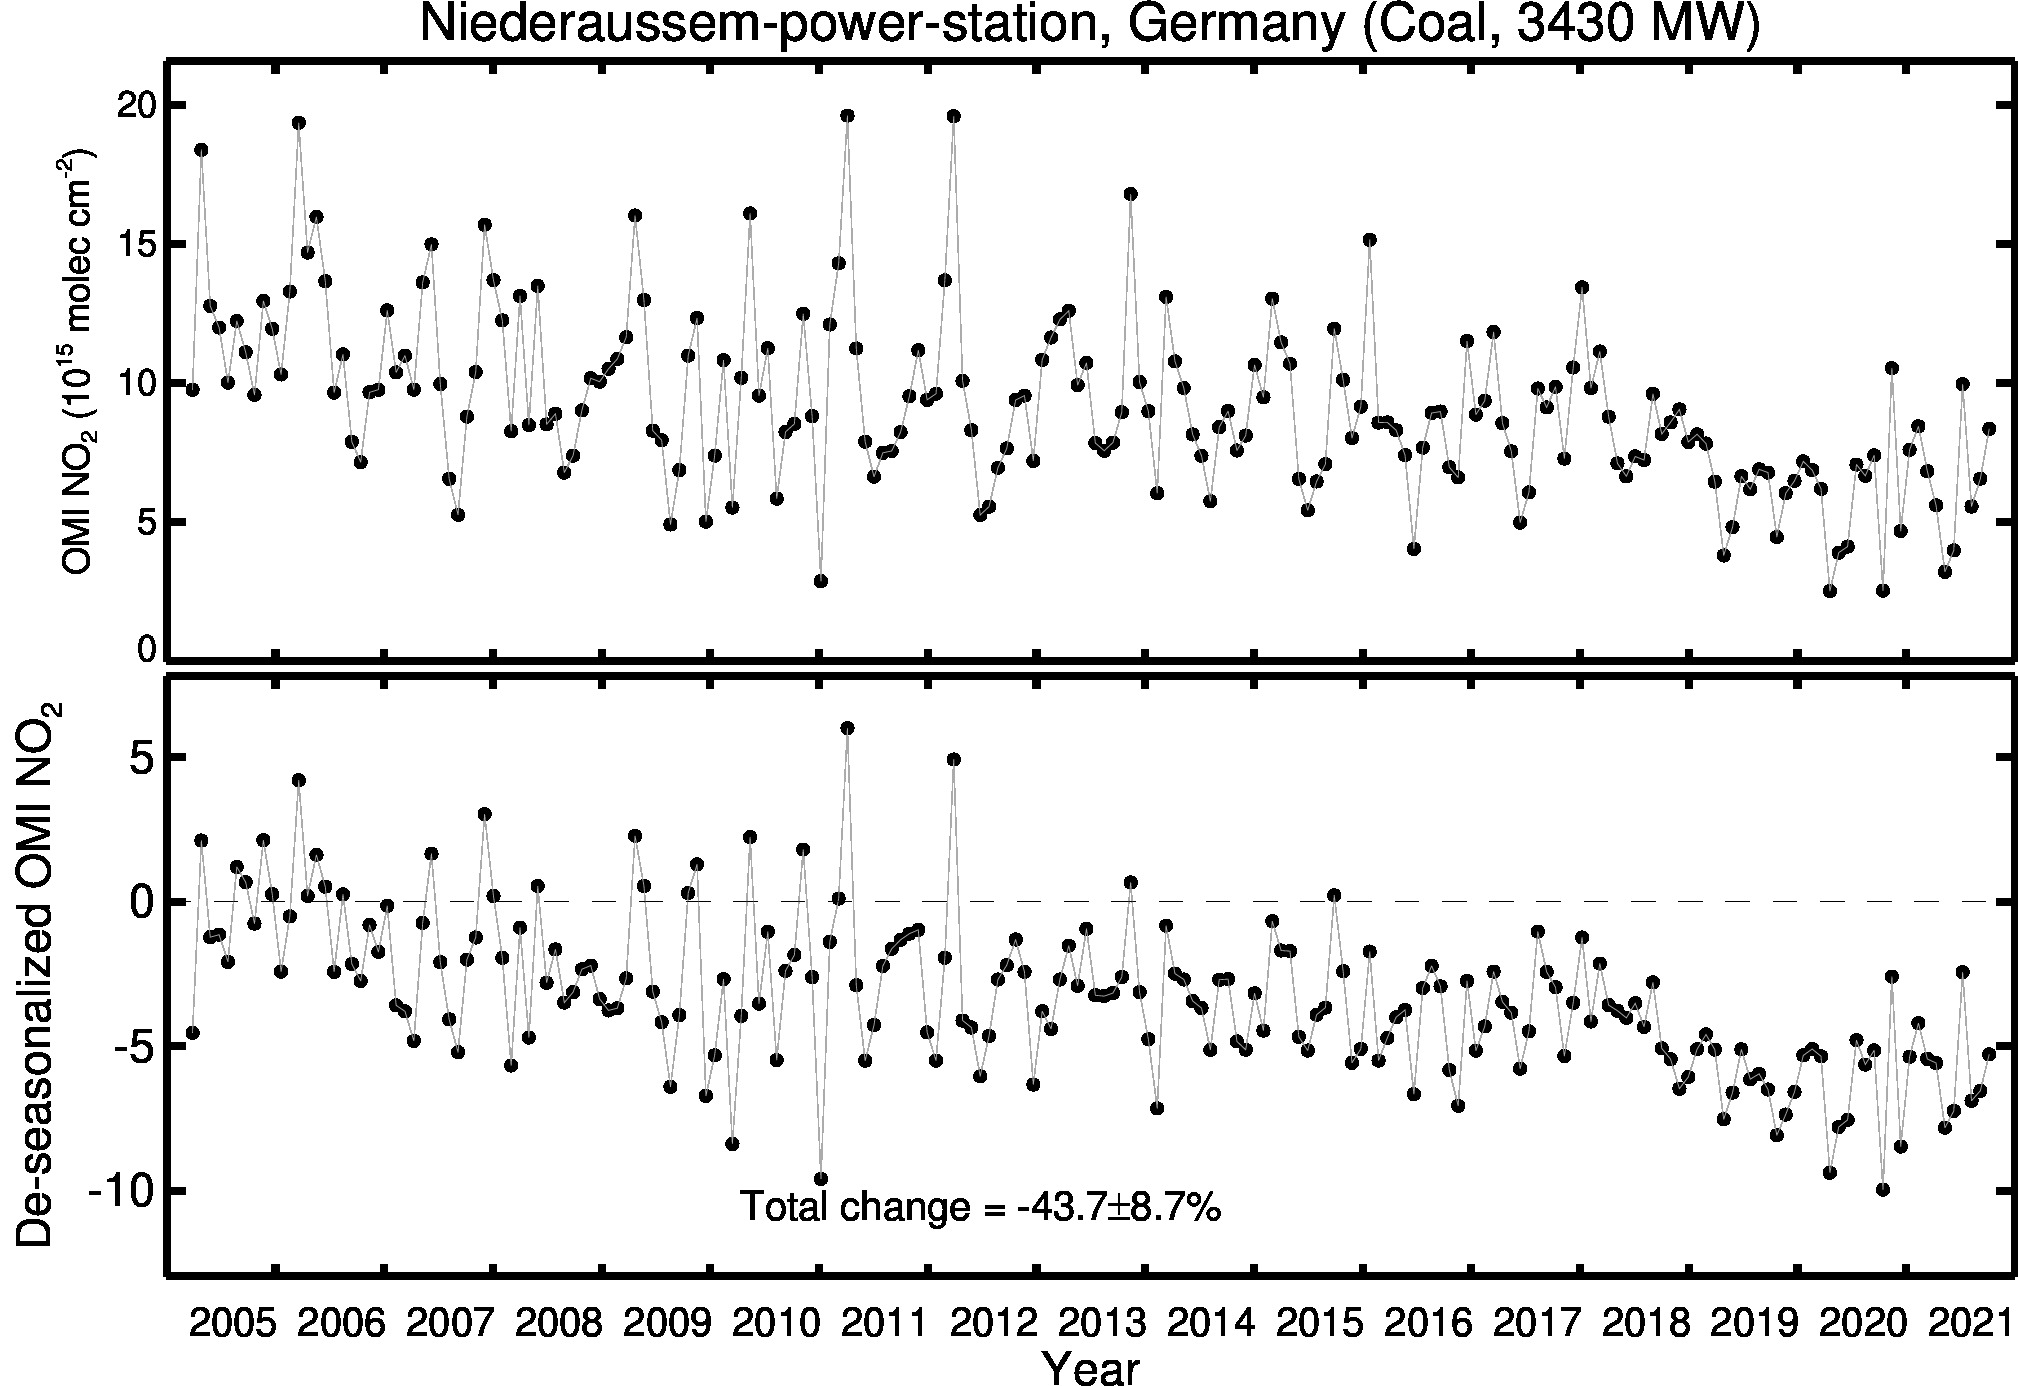 Niederaussem power station Line Plot 2005-2021